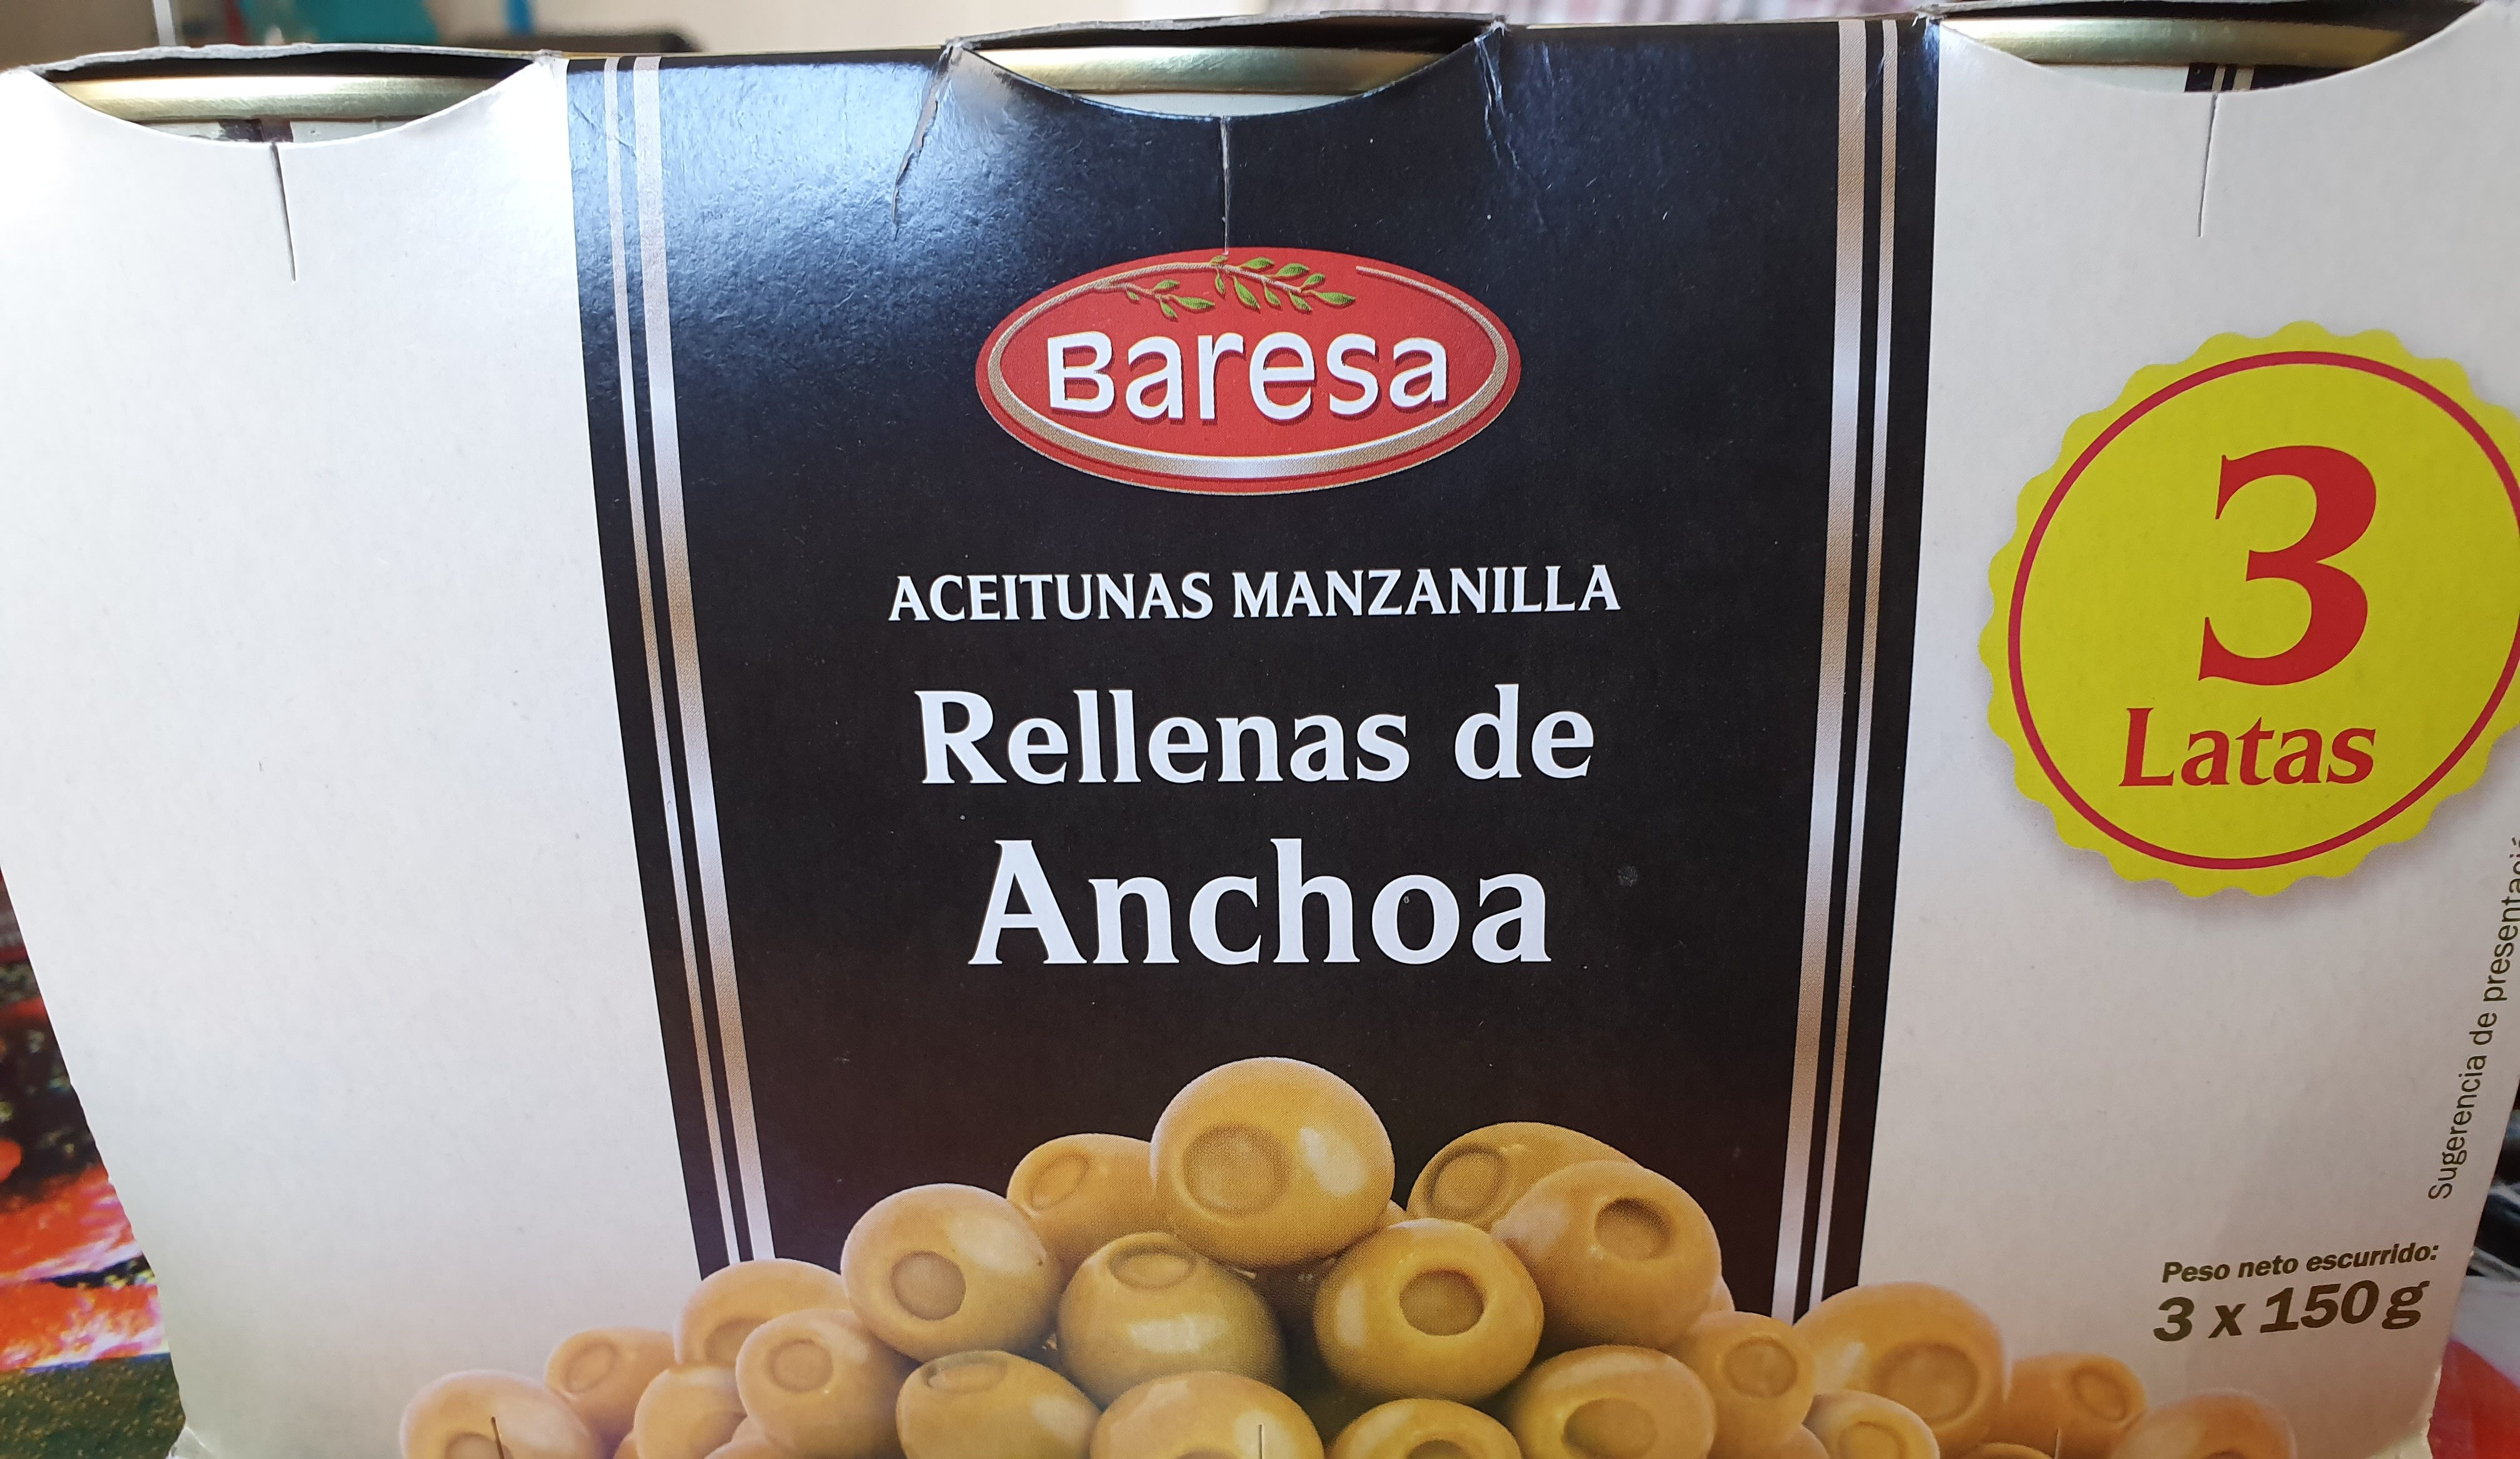 ACEITUNAS MANZANILLA RELLENAS DE ANCHOA - Product - es